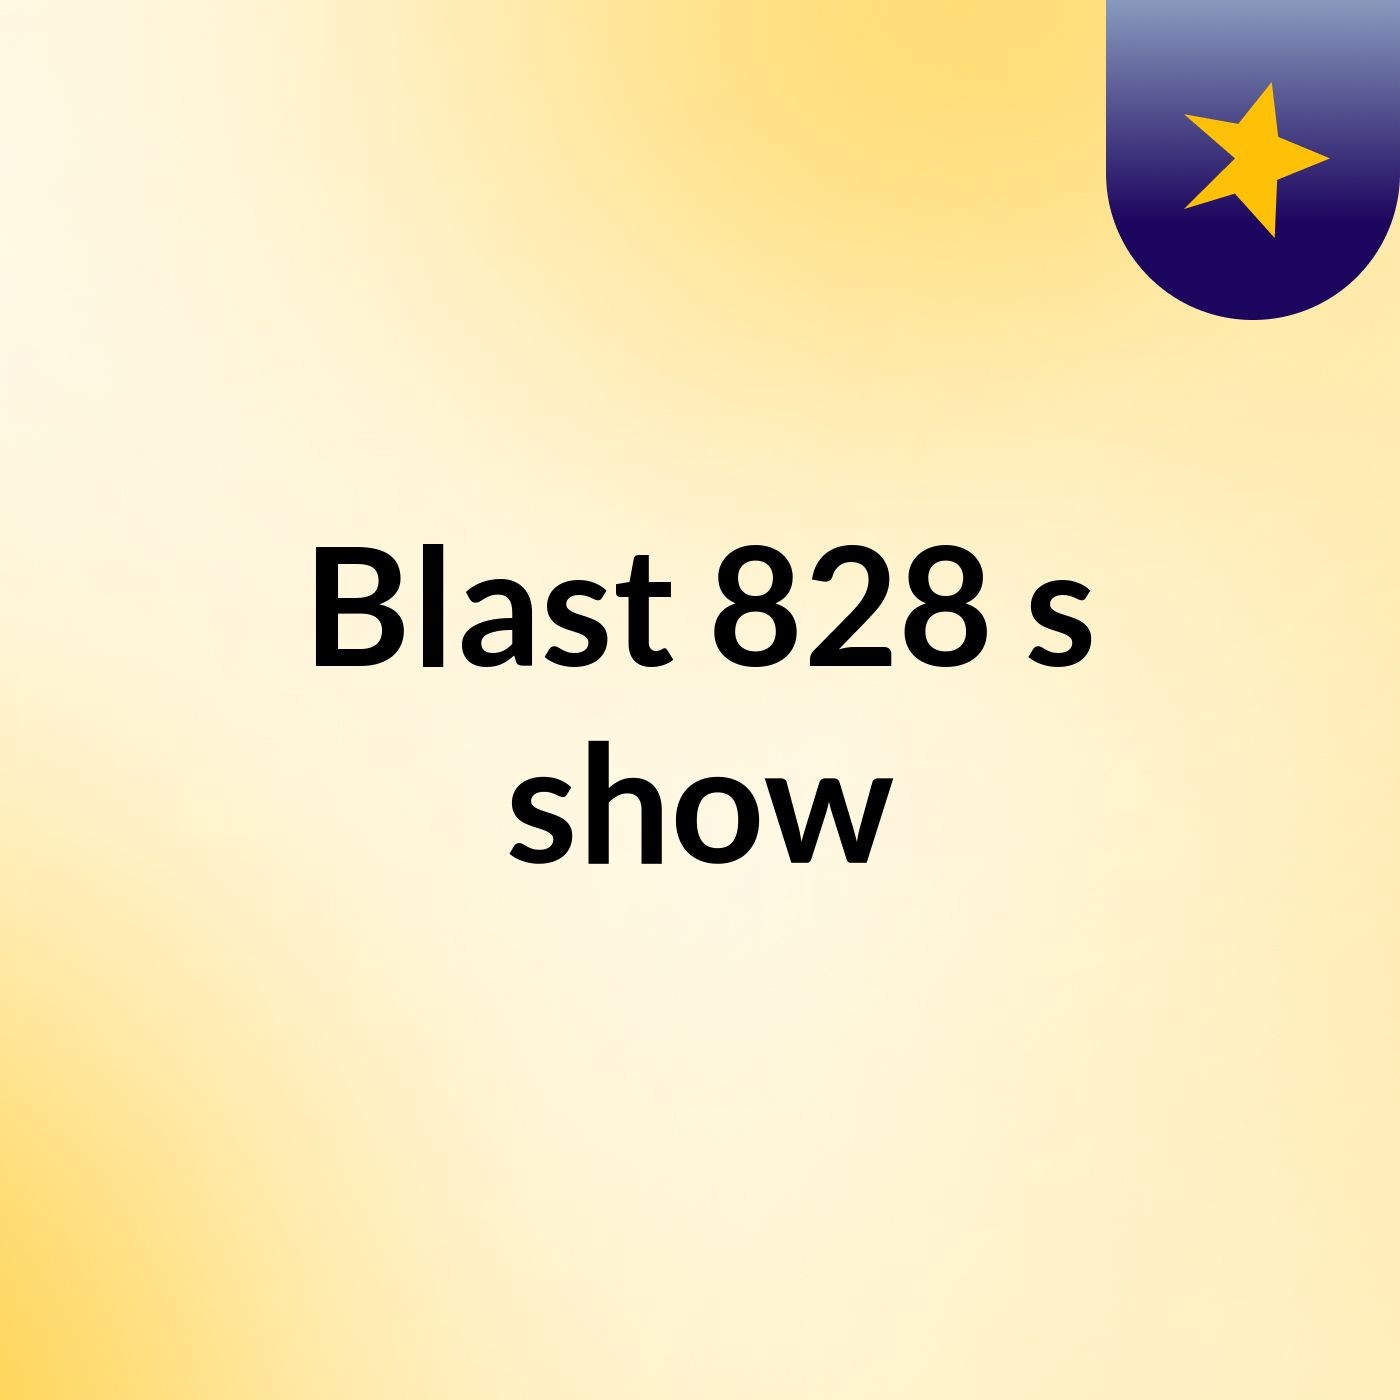 Blast 828's show